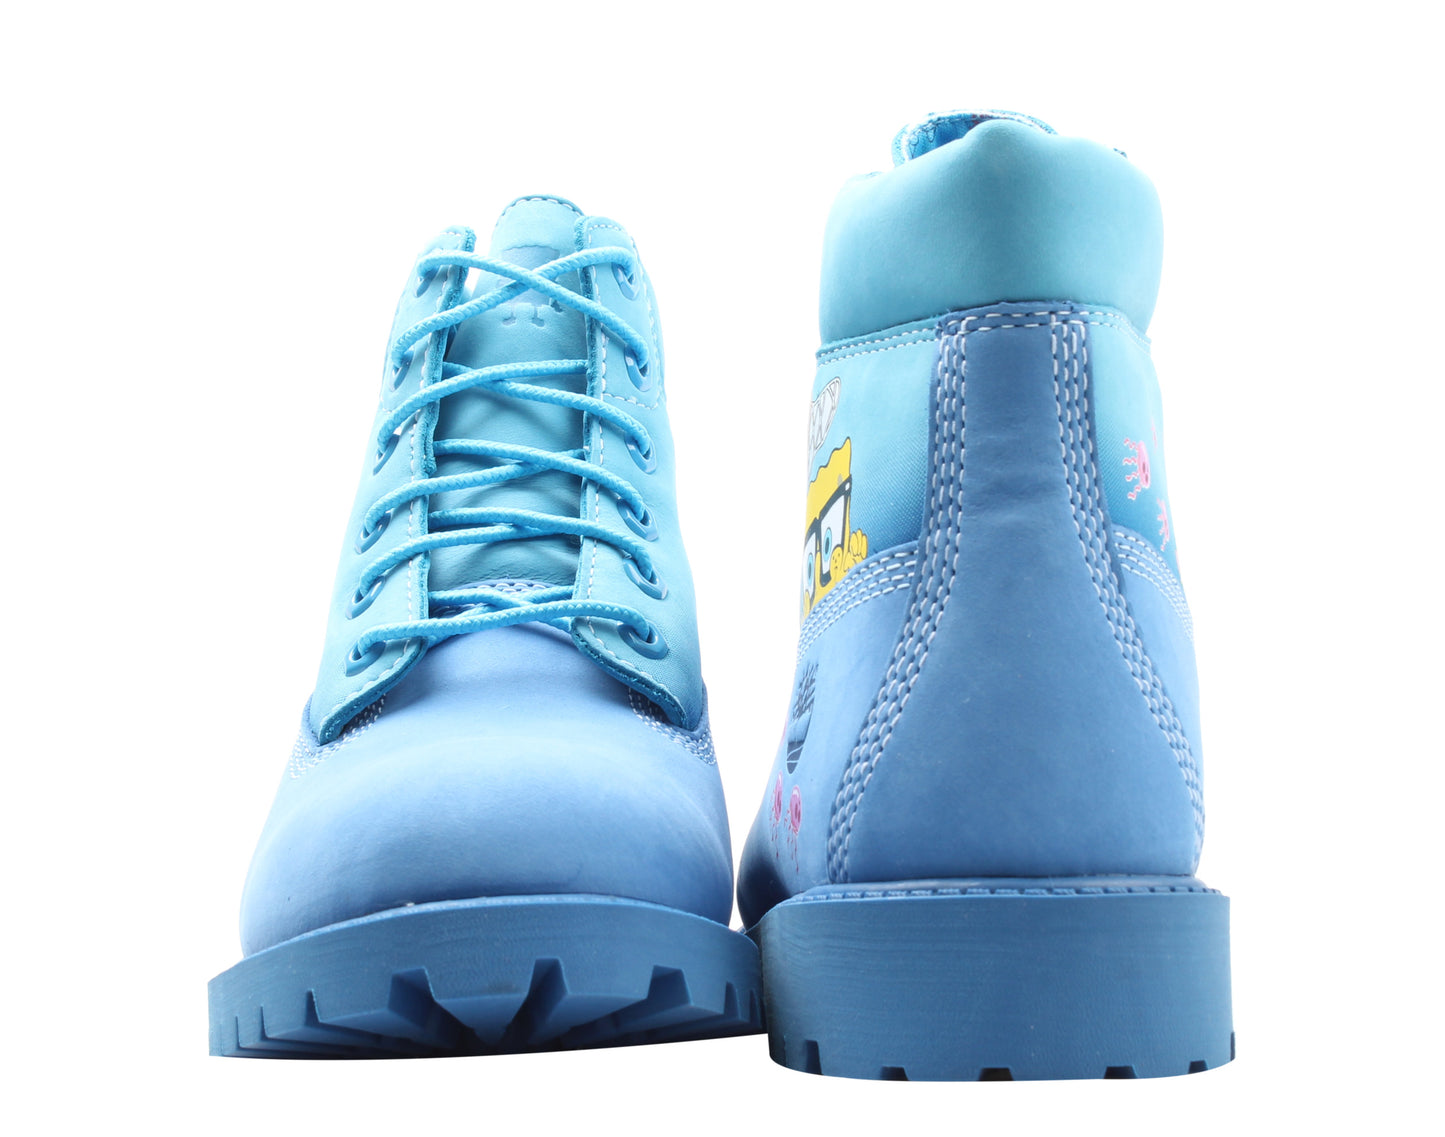 Timberland x SpongeBob Prem 6-Inch Waterproof Junior Blue Big Kids Boots A22M7